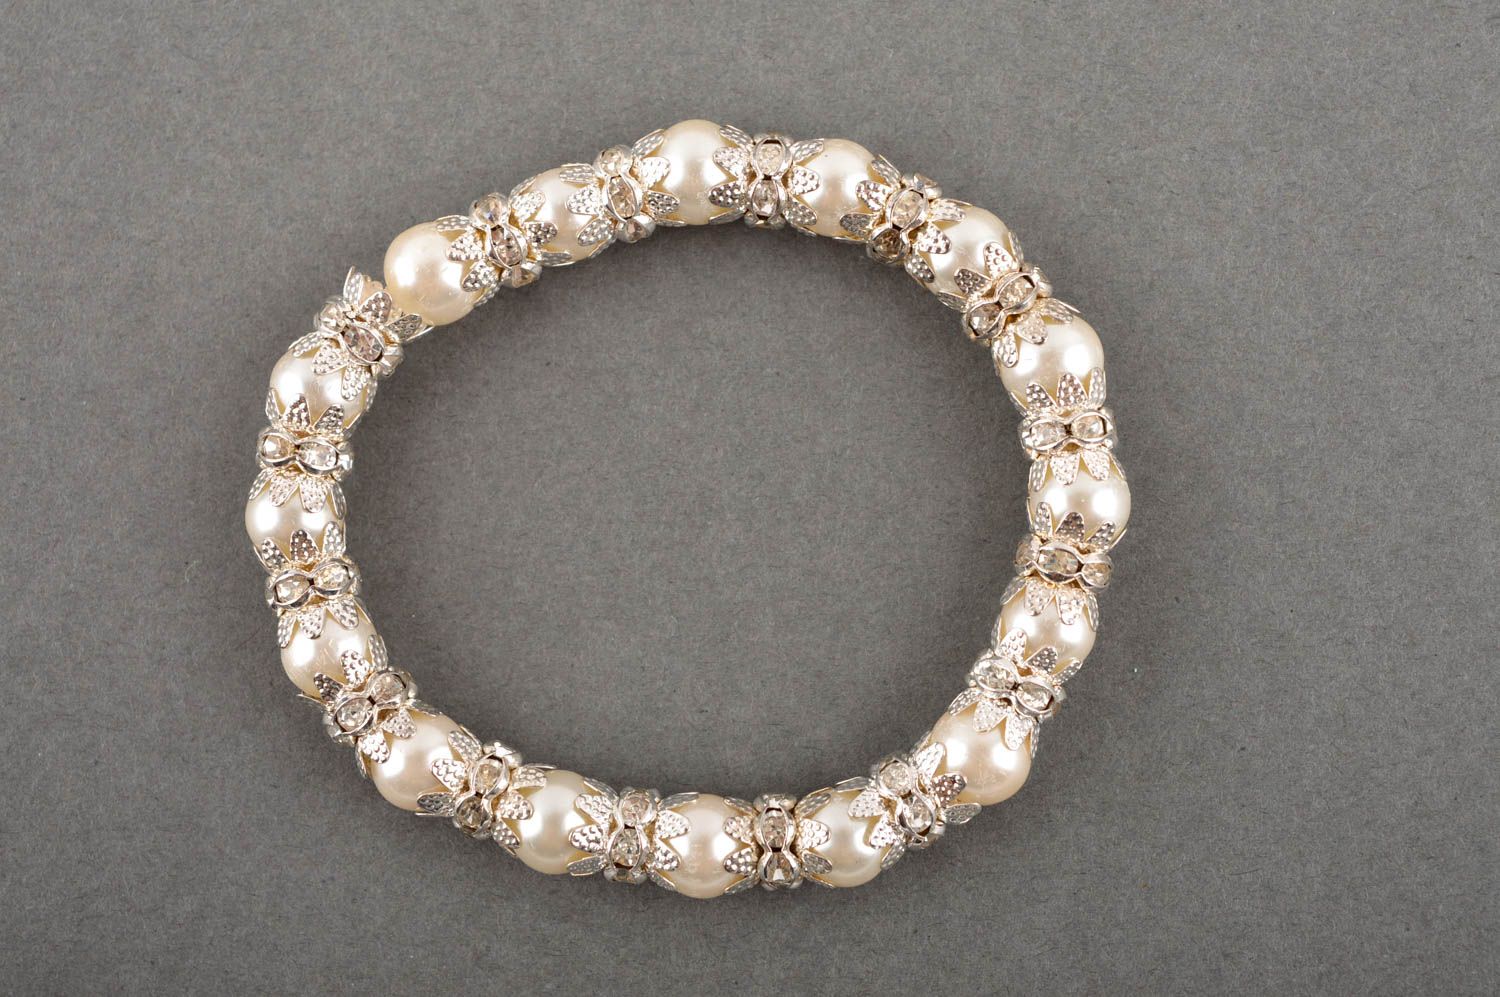 Pearl bracelet handmade jewelry wrist bracelet designer accessories gift for her photo 2